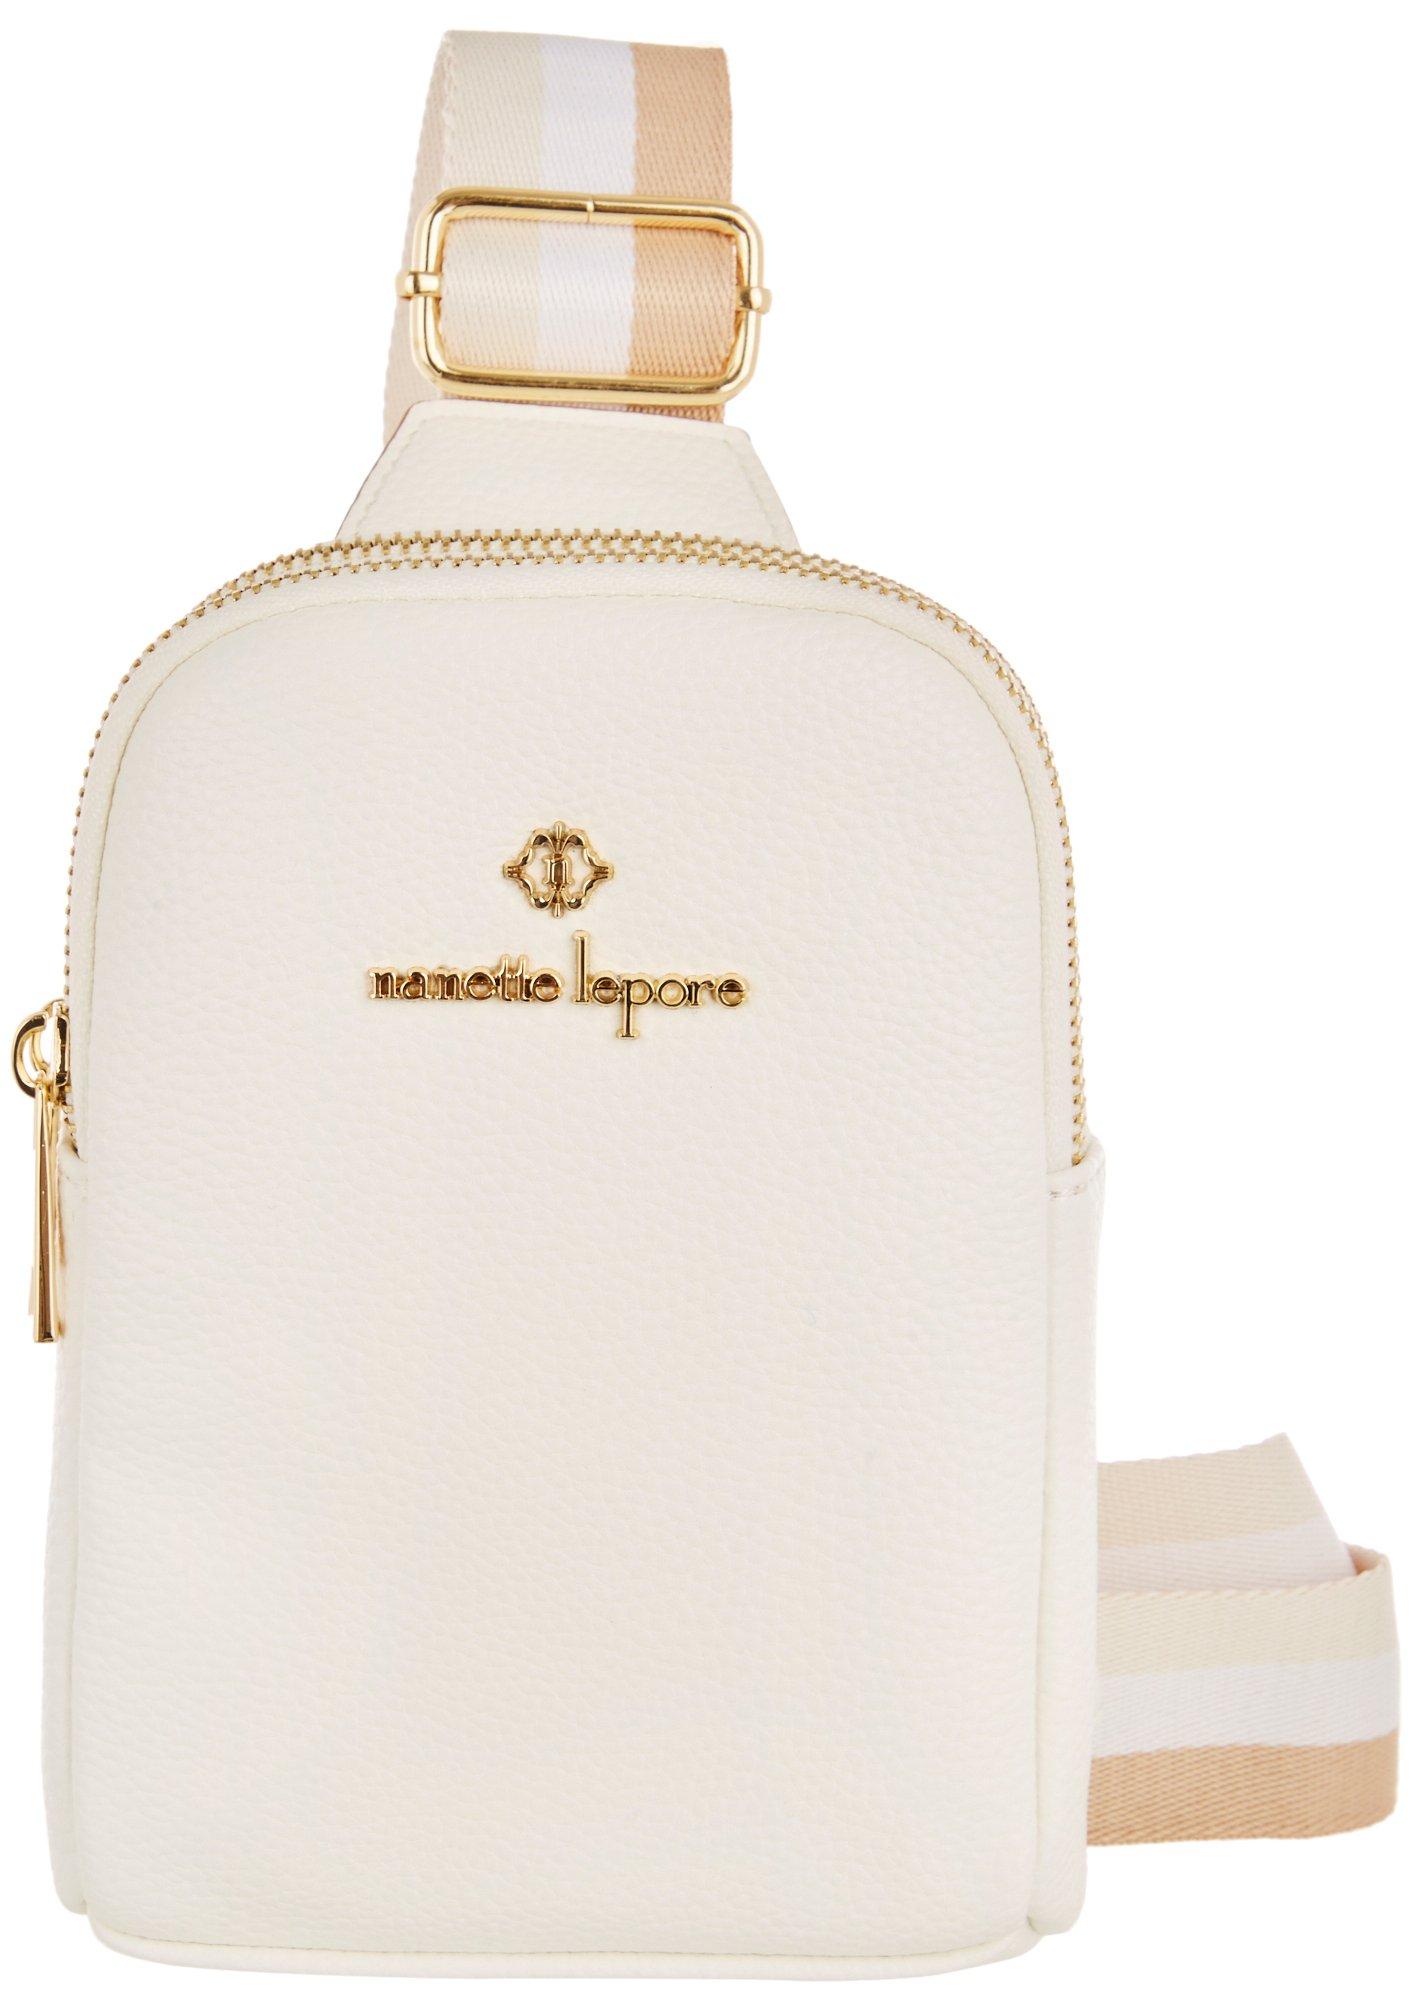 Nanette Lepore Davey Solid Mini Sling Bag